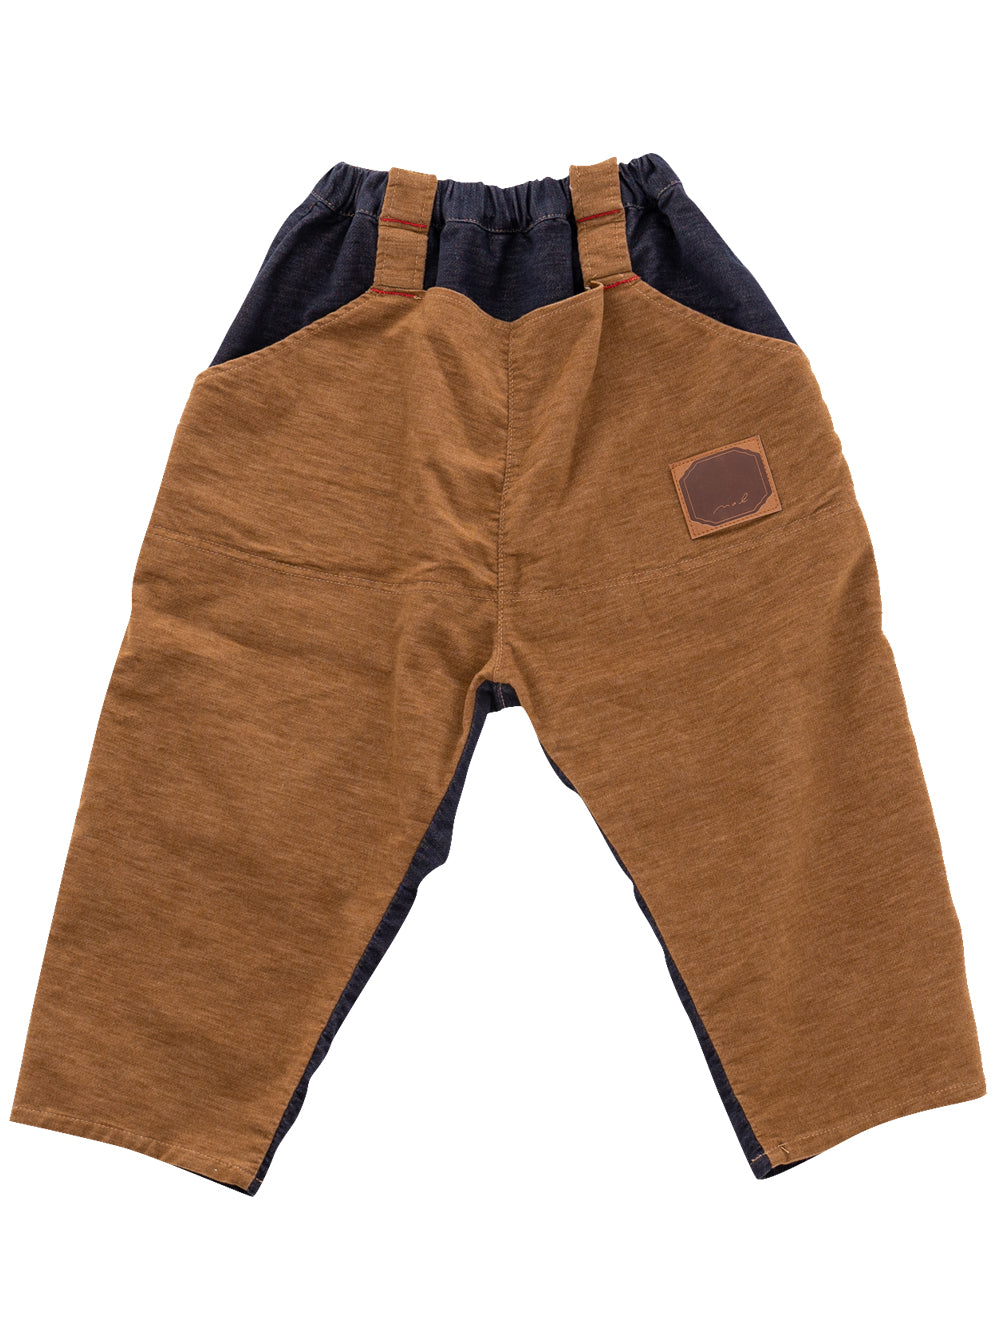 Overalls Brown Pants